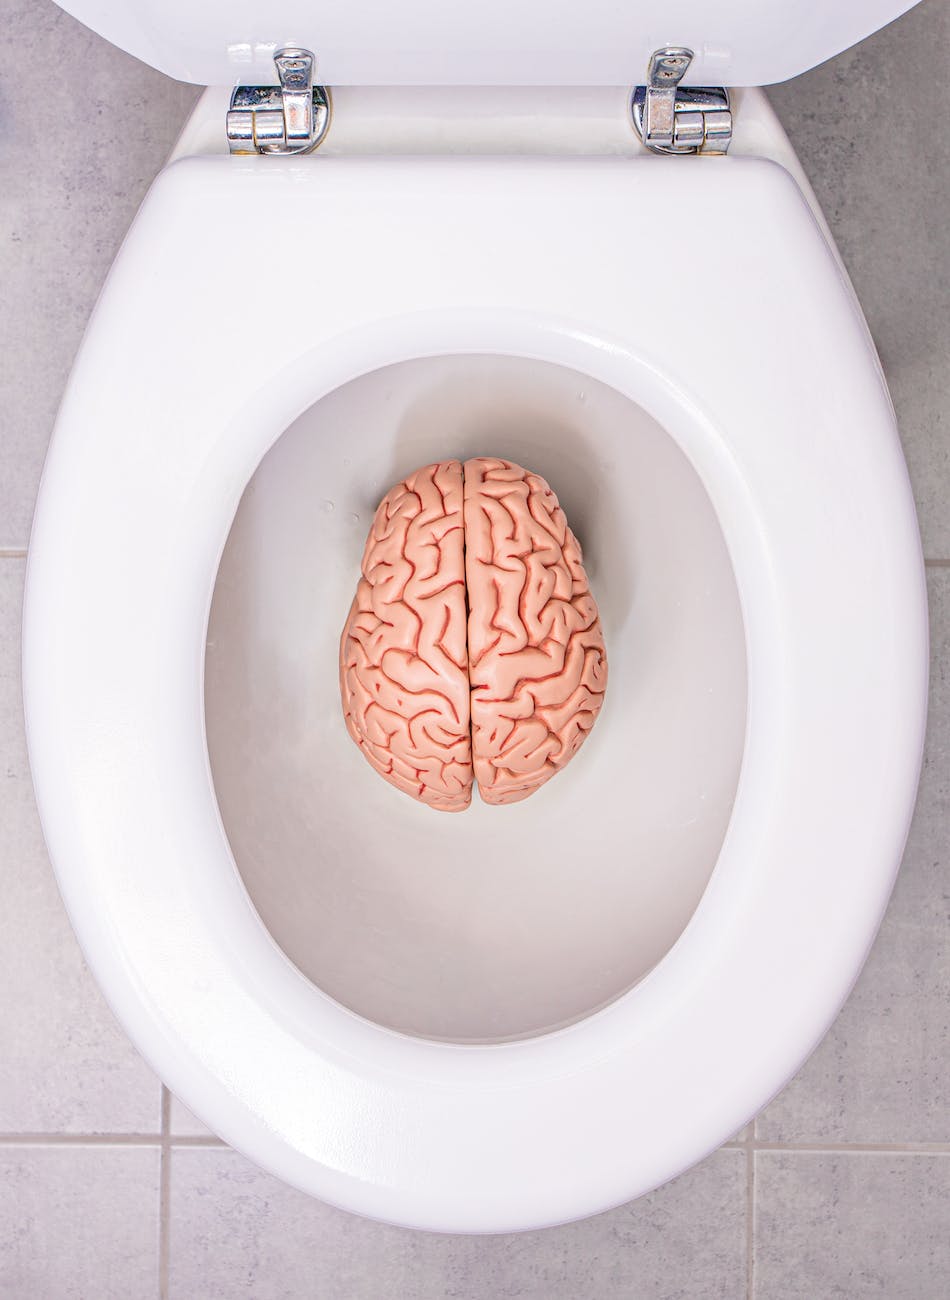 a human brain model in a toilet bowl